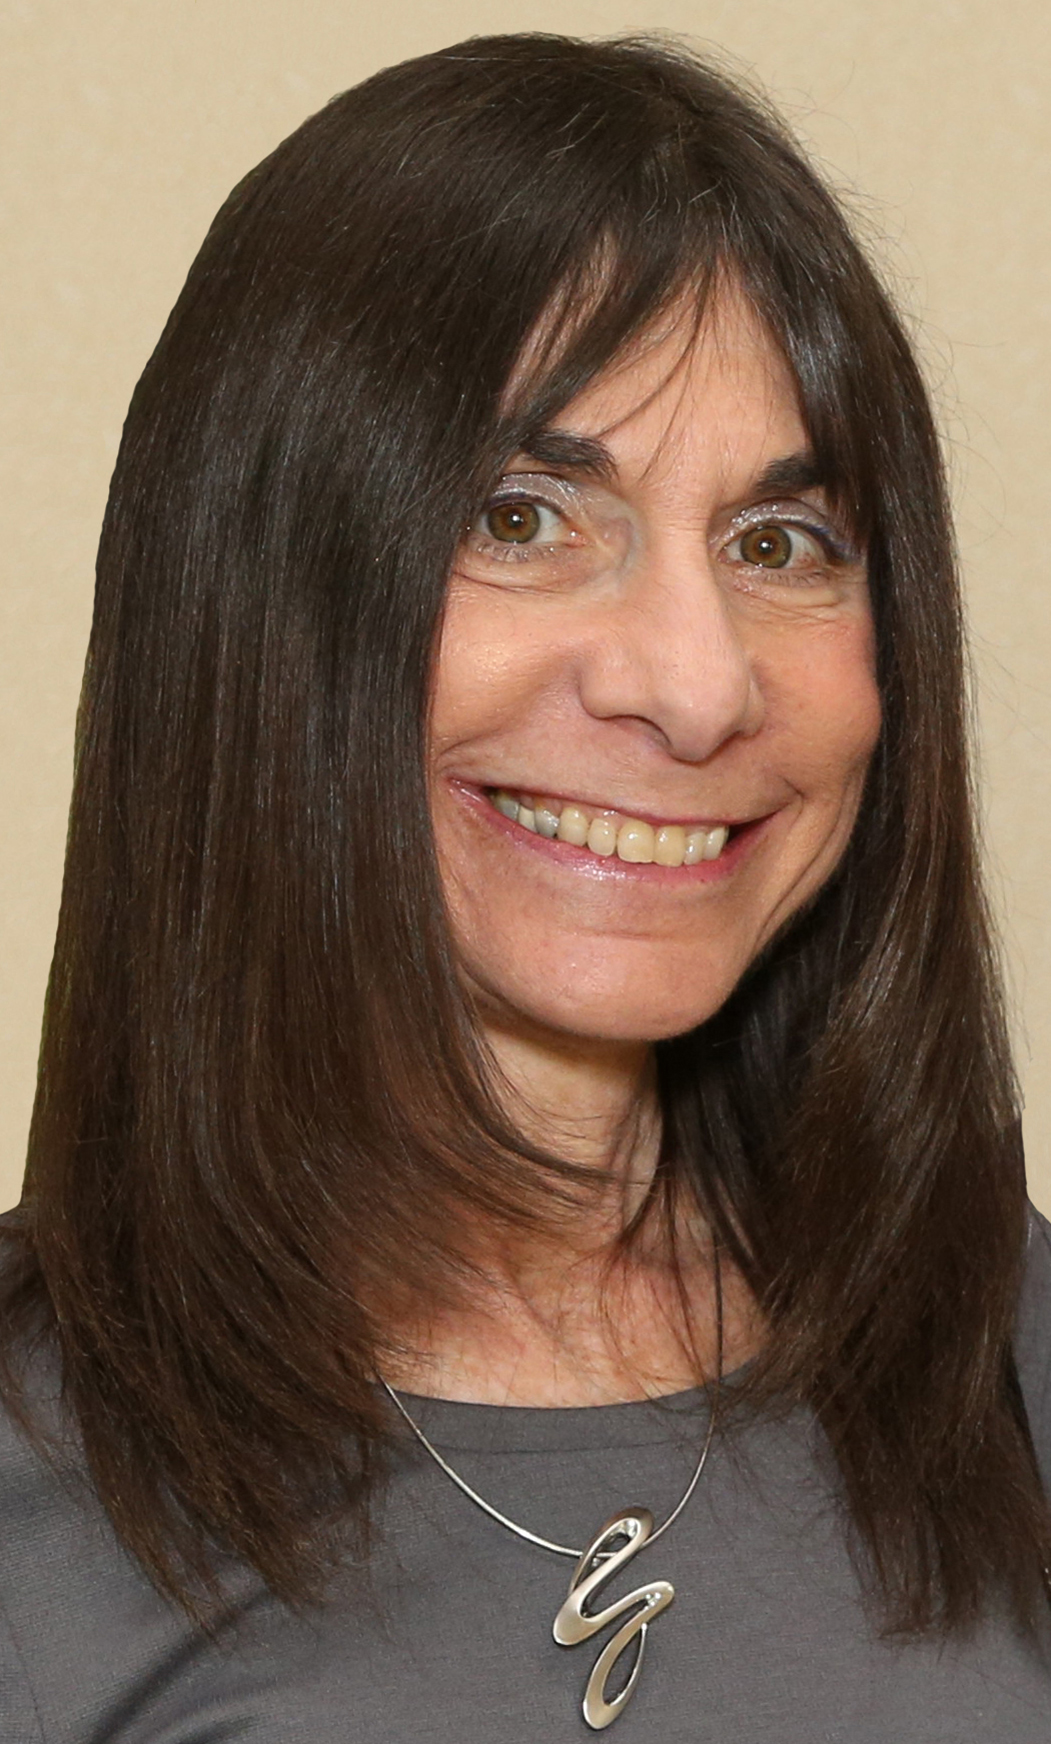 Nancy Segal is Professor of Psychology at California State University, Fullerton.